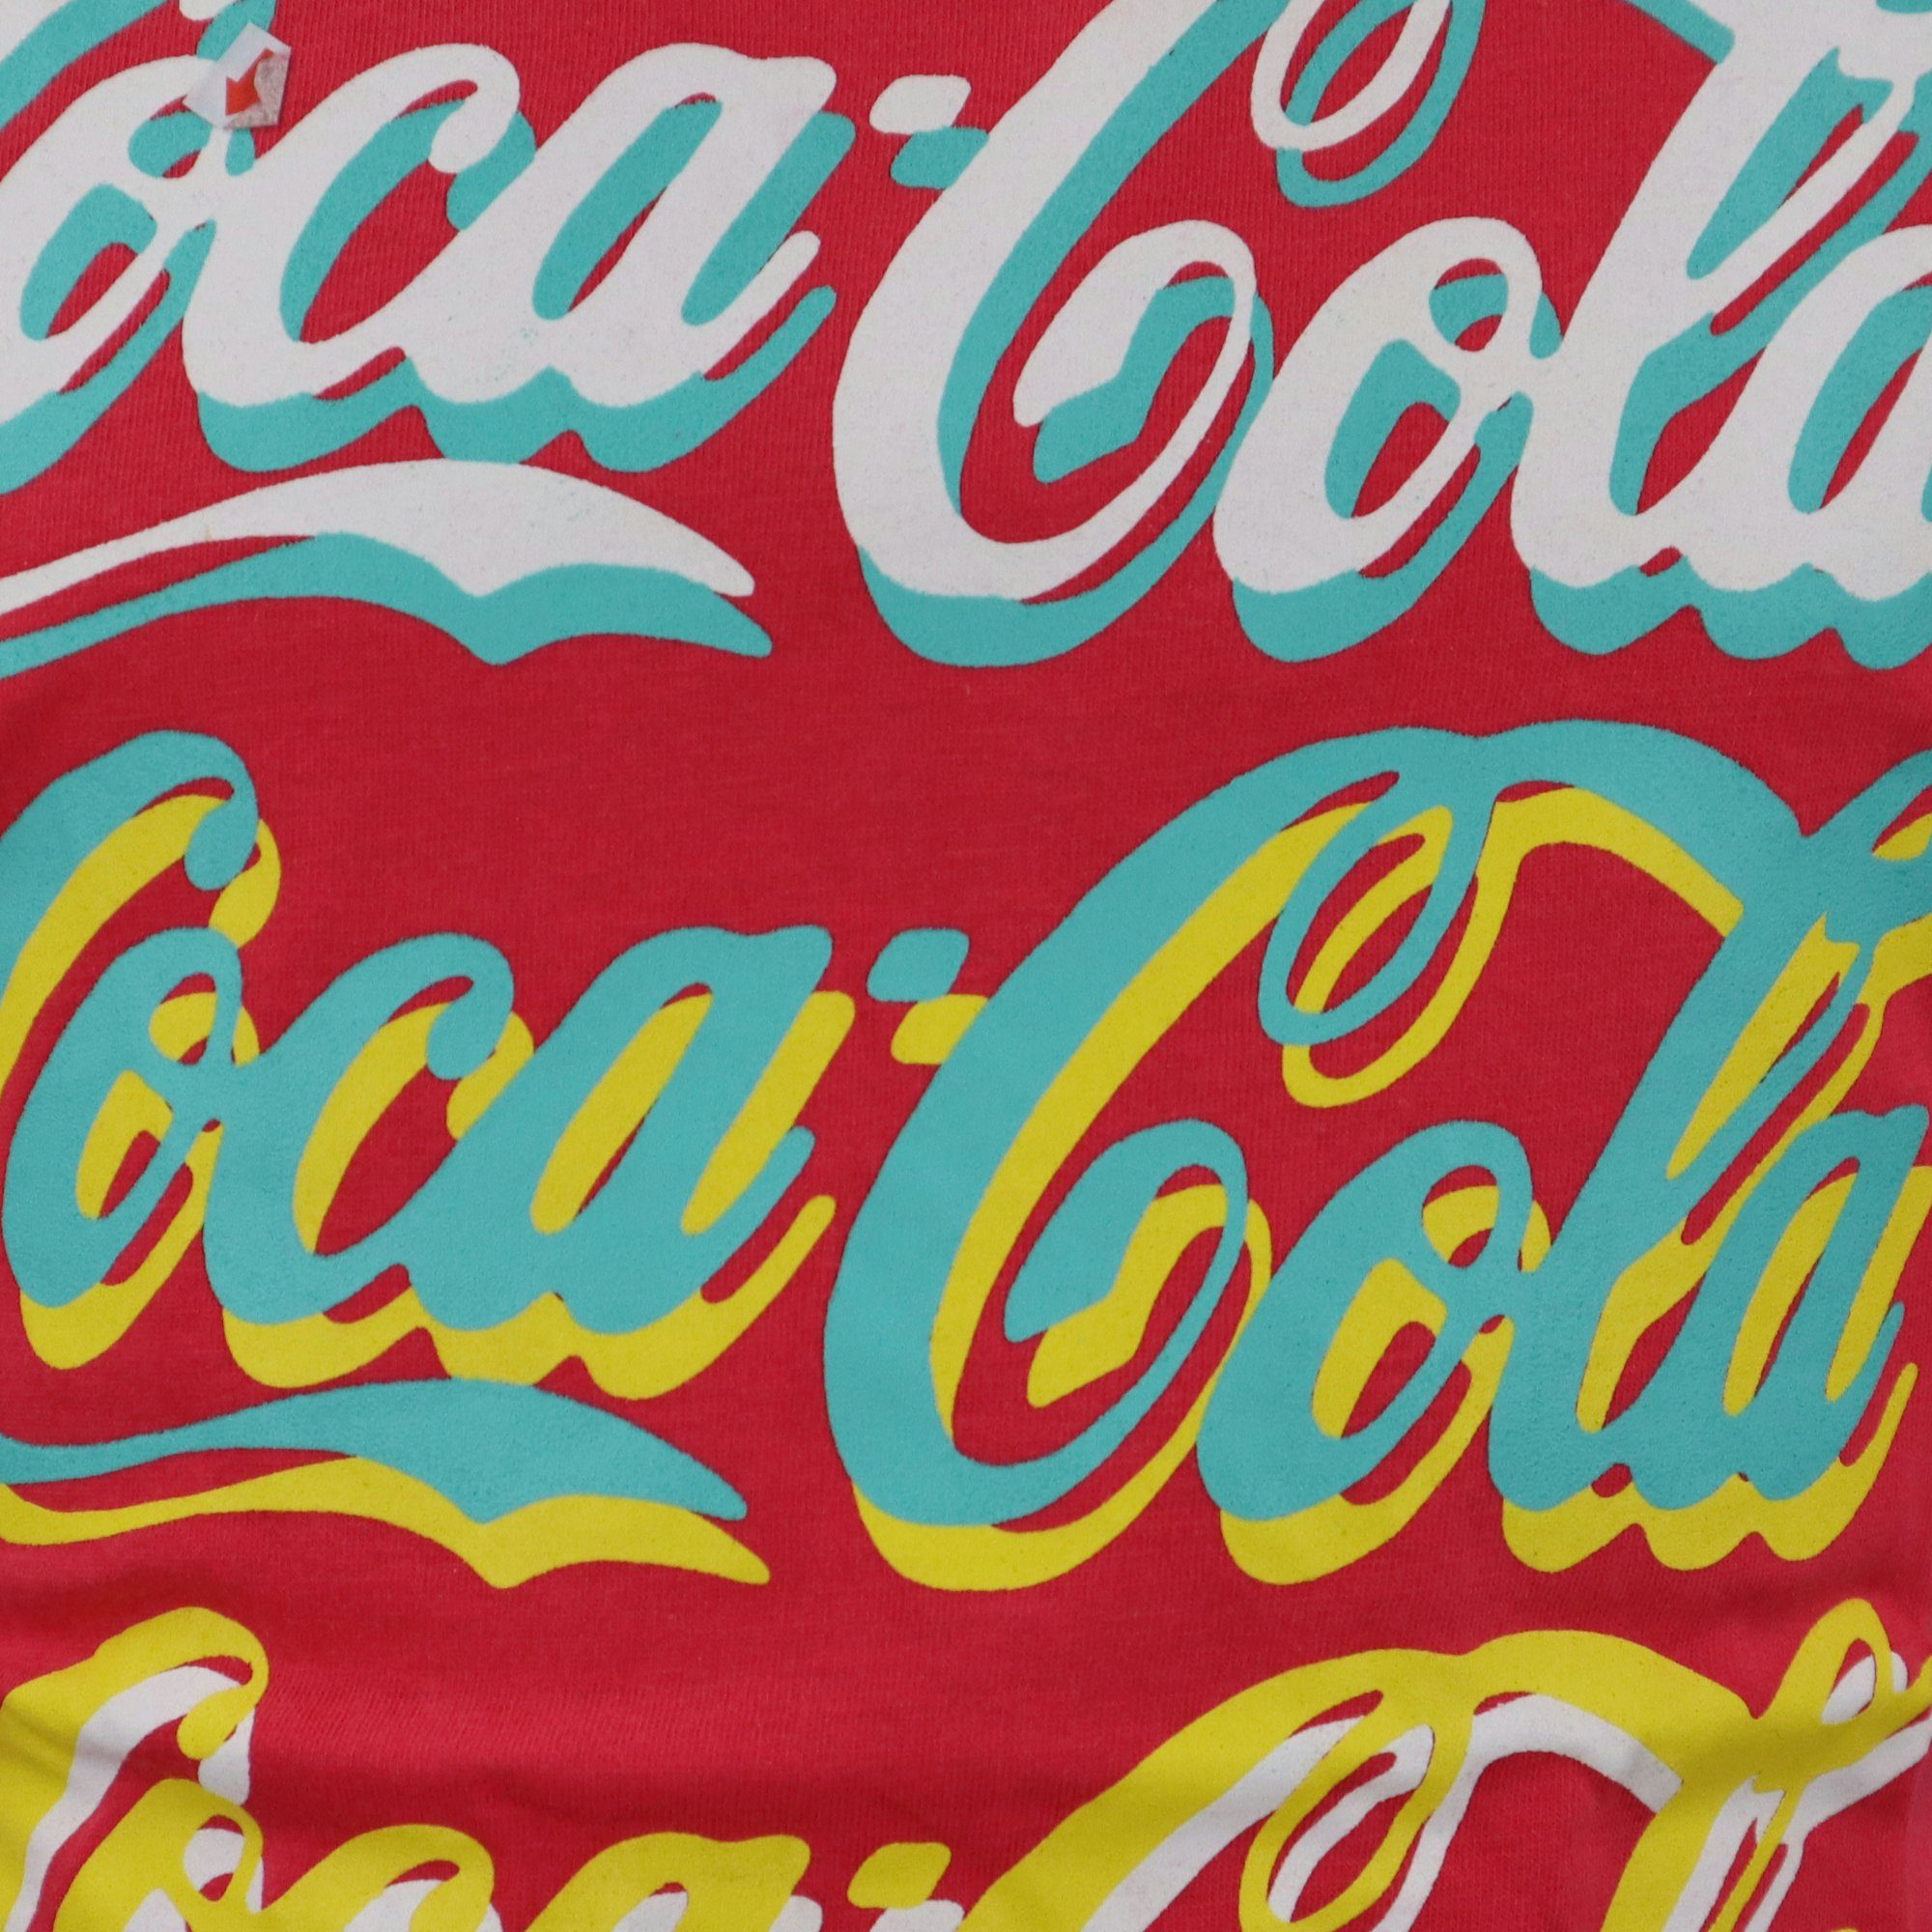 COCA COLA Print-Shirt Rot Top Baumwolle Jugend 134 bis Coca 164, T-Shirt Cola Kinder Mädchen kurzes Gr